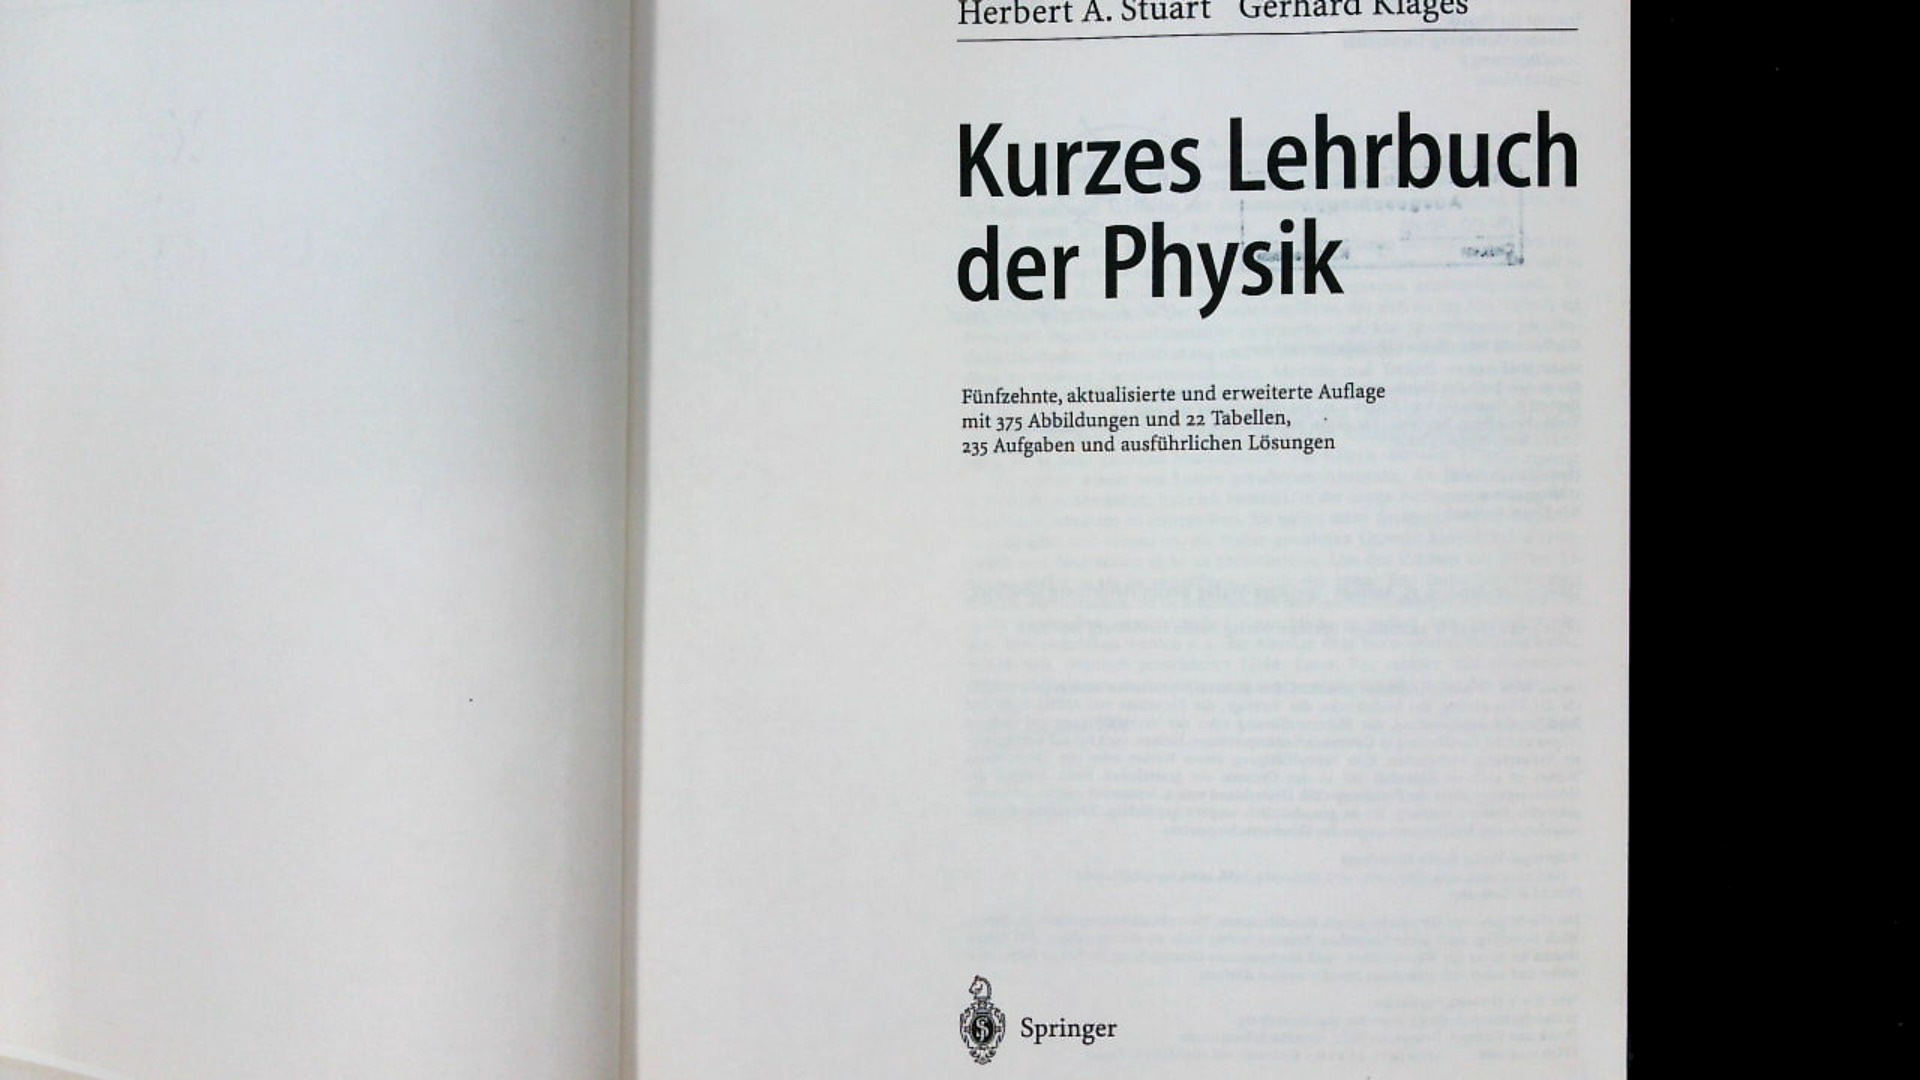 Kurzes Lehrbuch der Physik. (Springer-Lehrbuch). - Stuart Herbert, A. und Gerhard Klages,